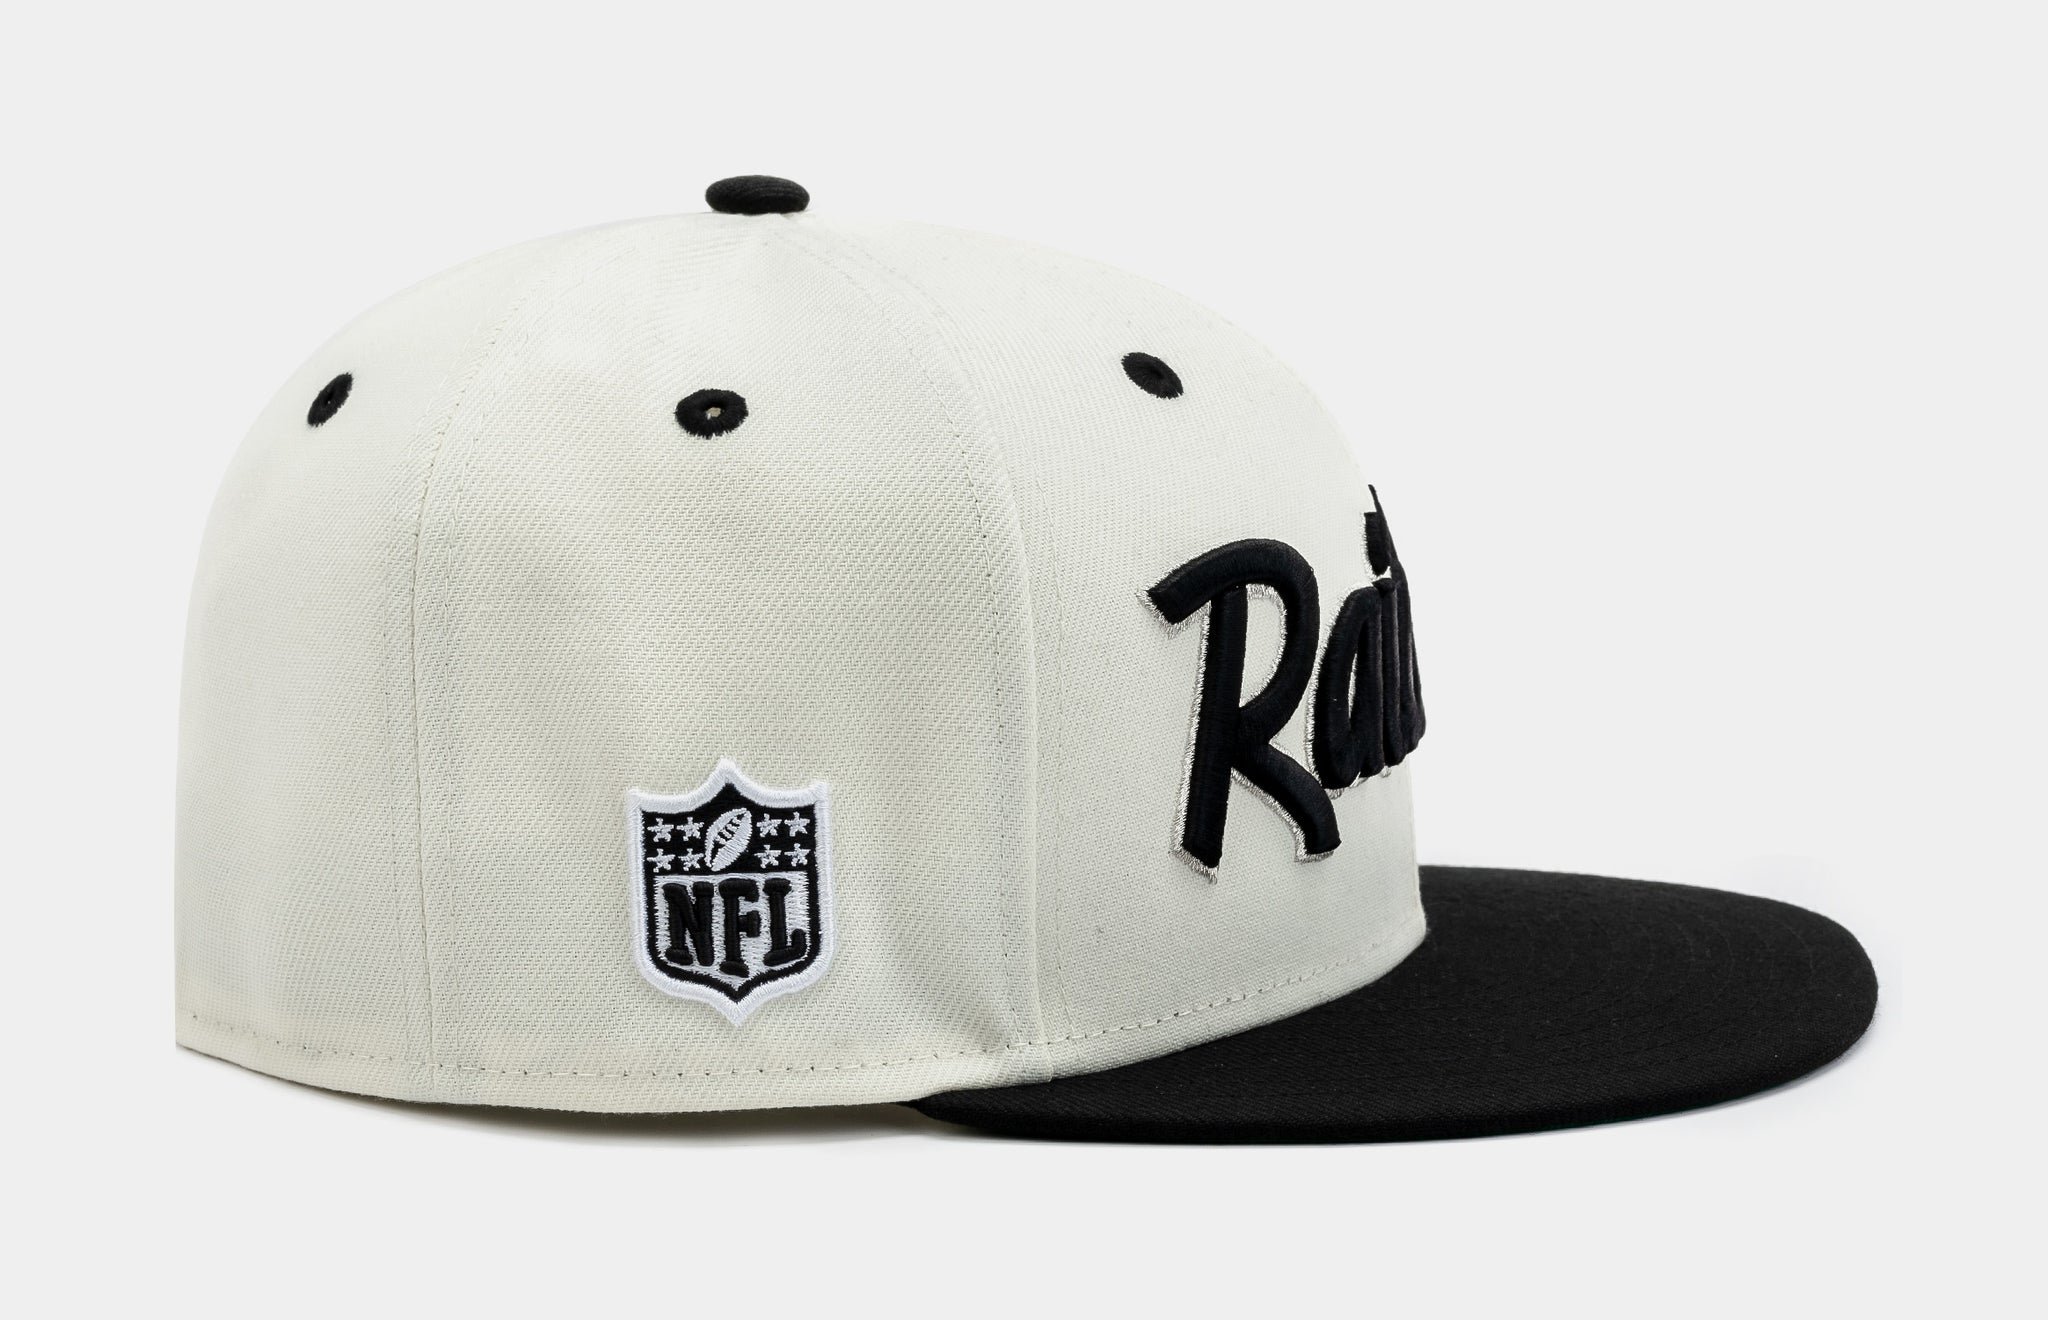 Las Vegas Raiders New Era 59FIFTY Fitted Hat Black / 8